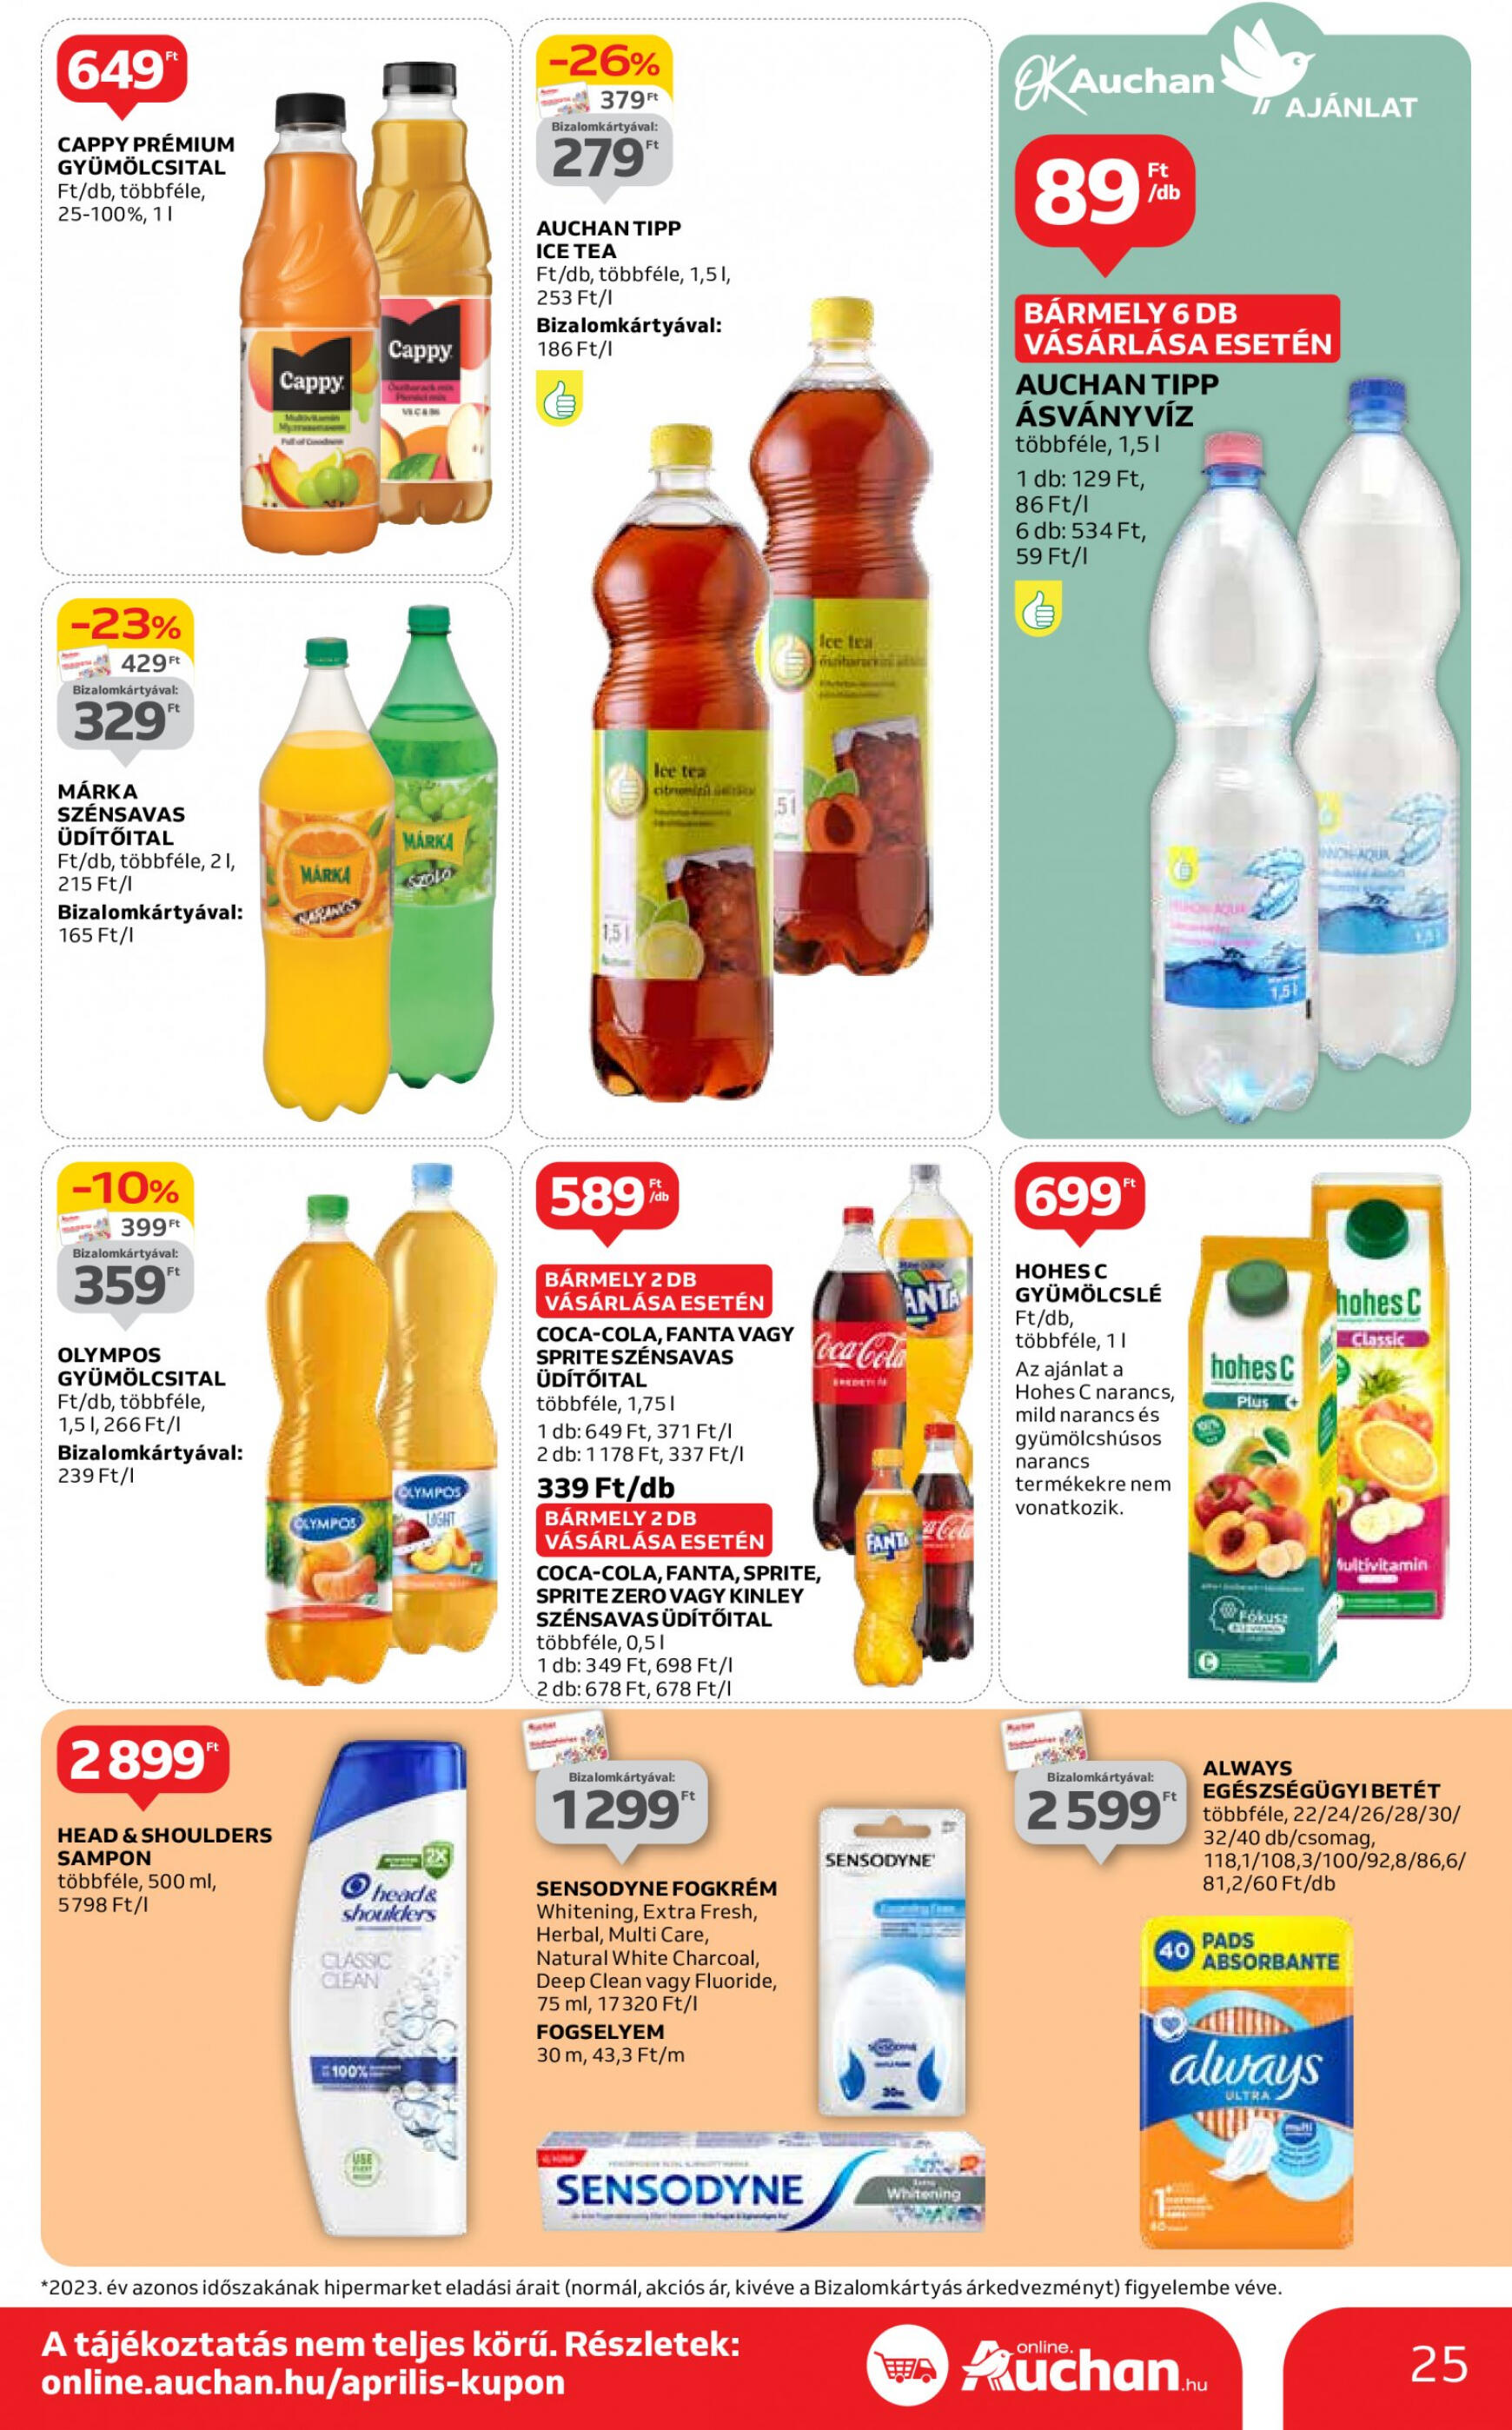 auchan - Aktuális újság Auchan 04.18. - 04.24. - page: 25